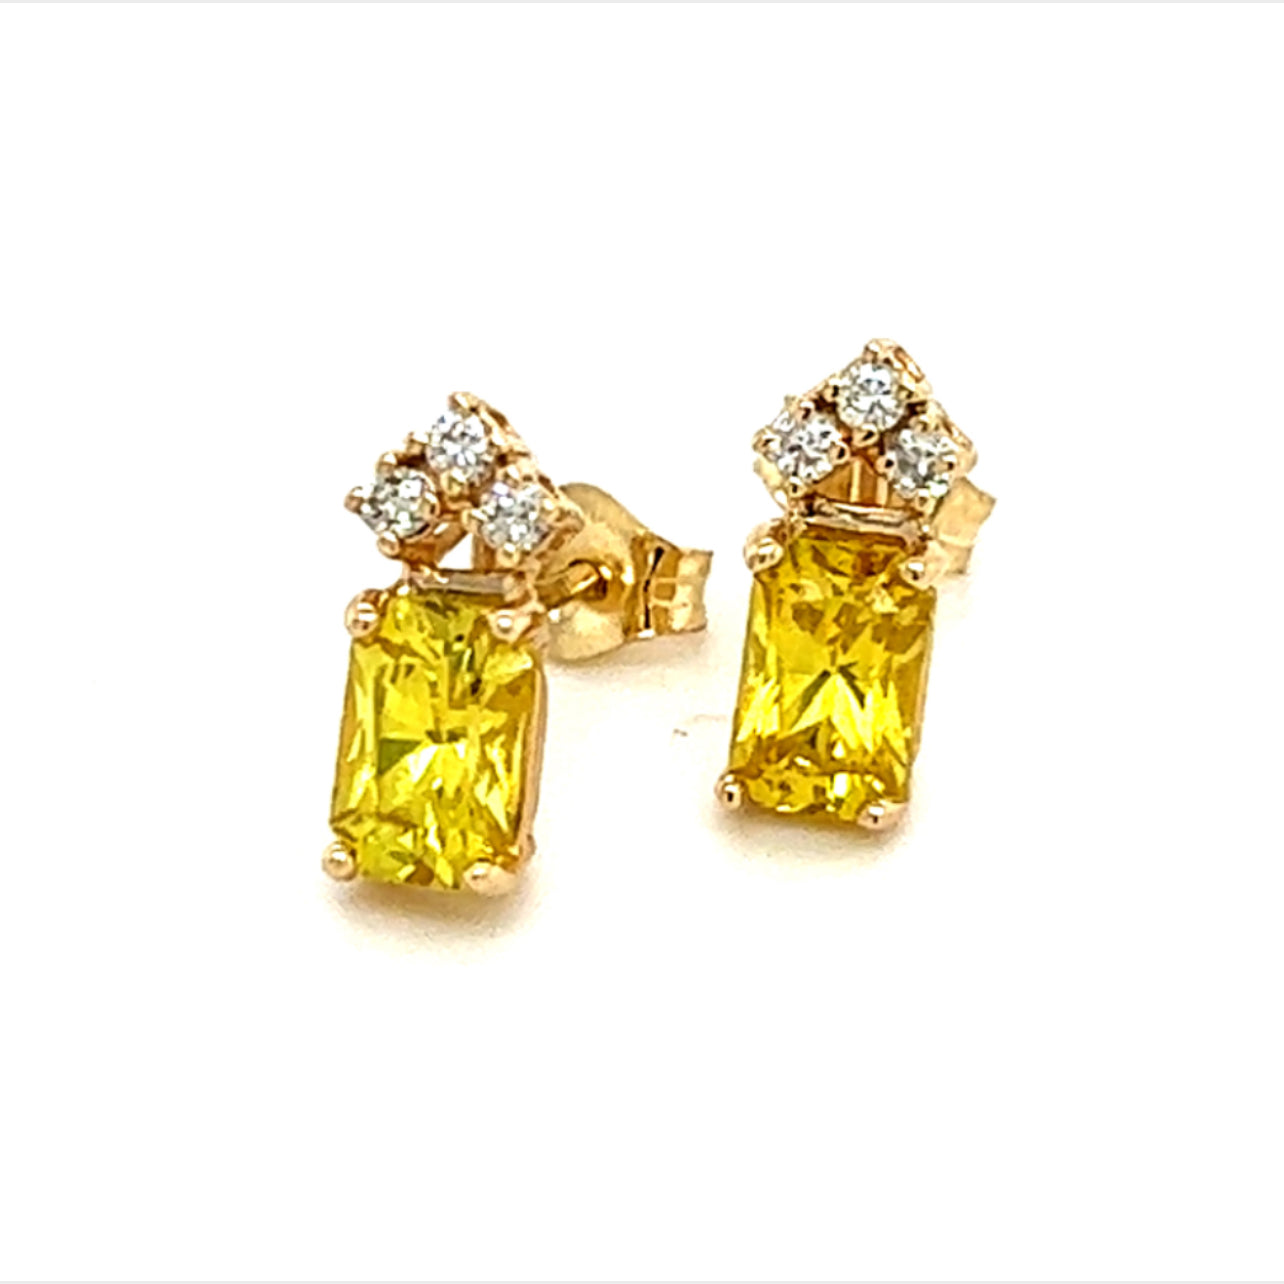 Natural Sapphire Diamond Earrings 14k Gold 1.74 TCW Certified $1,590 121259 - Certified Estate Jewelry